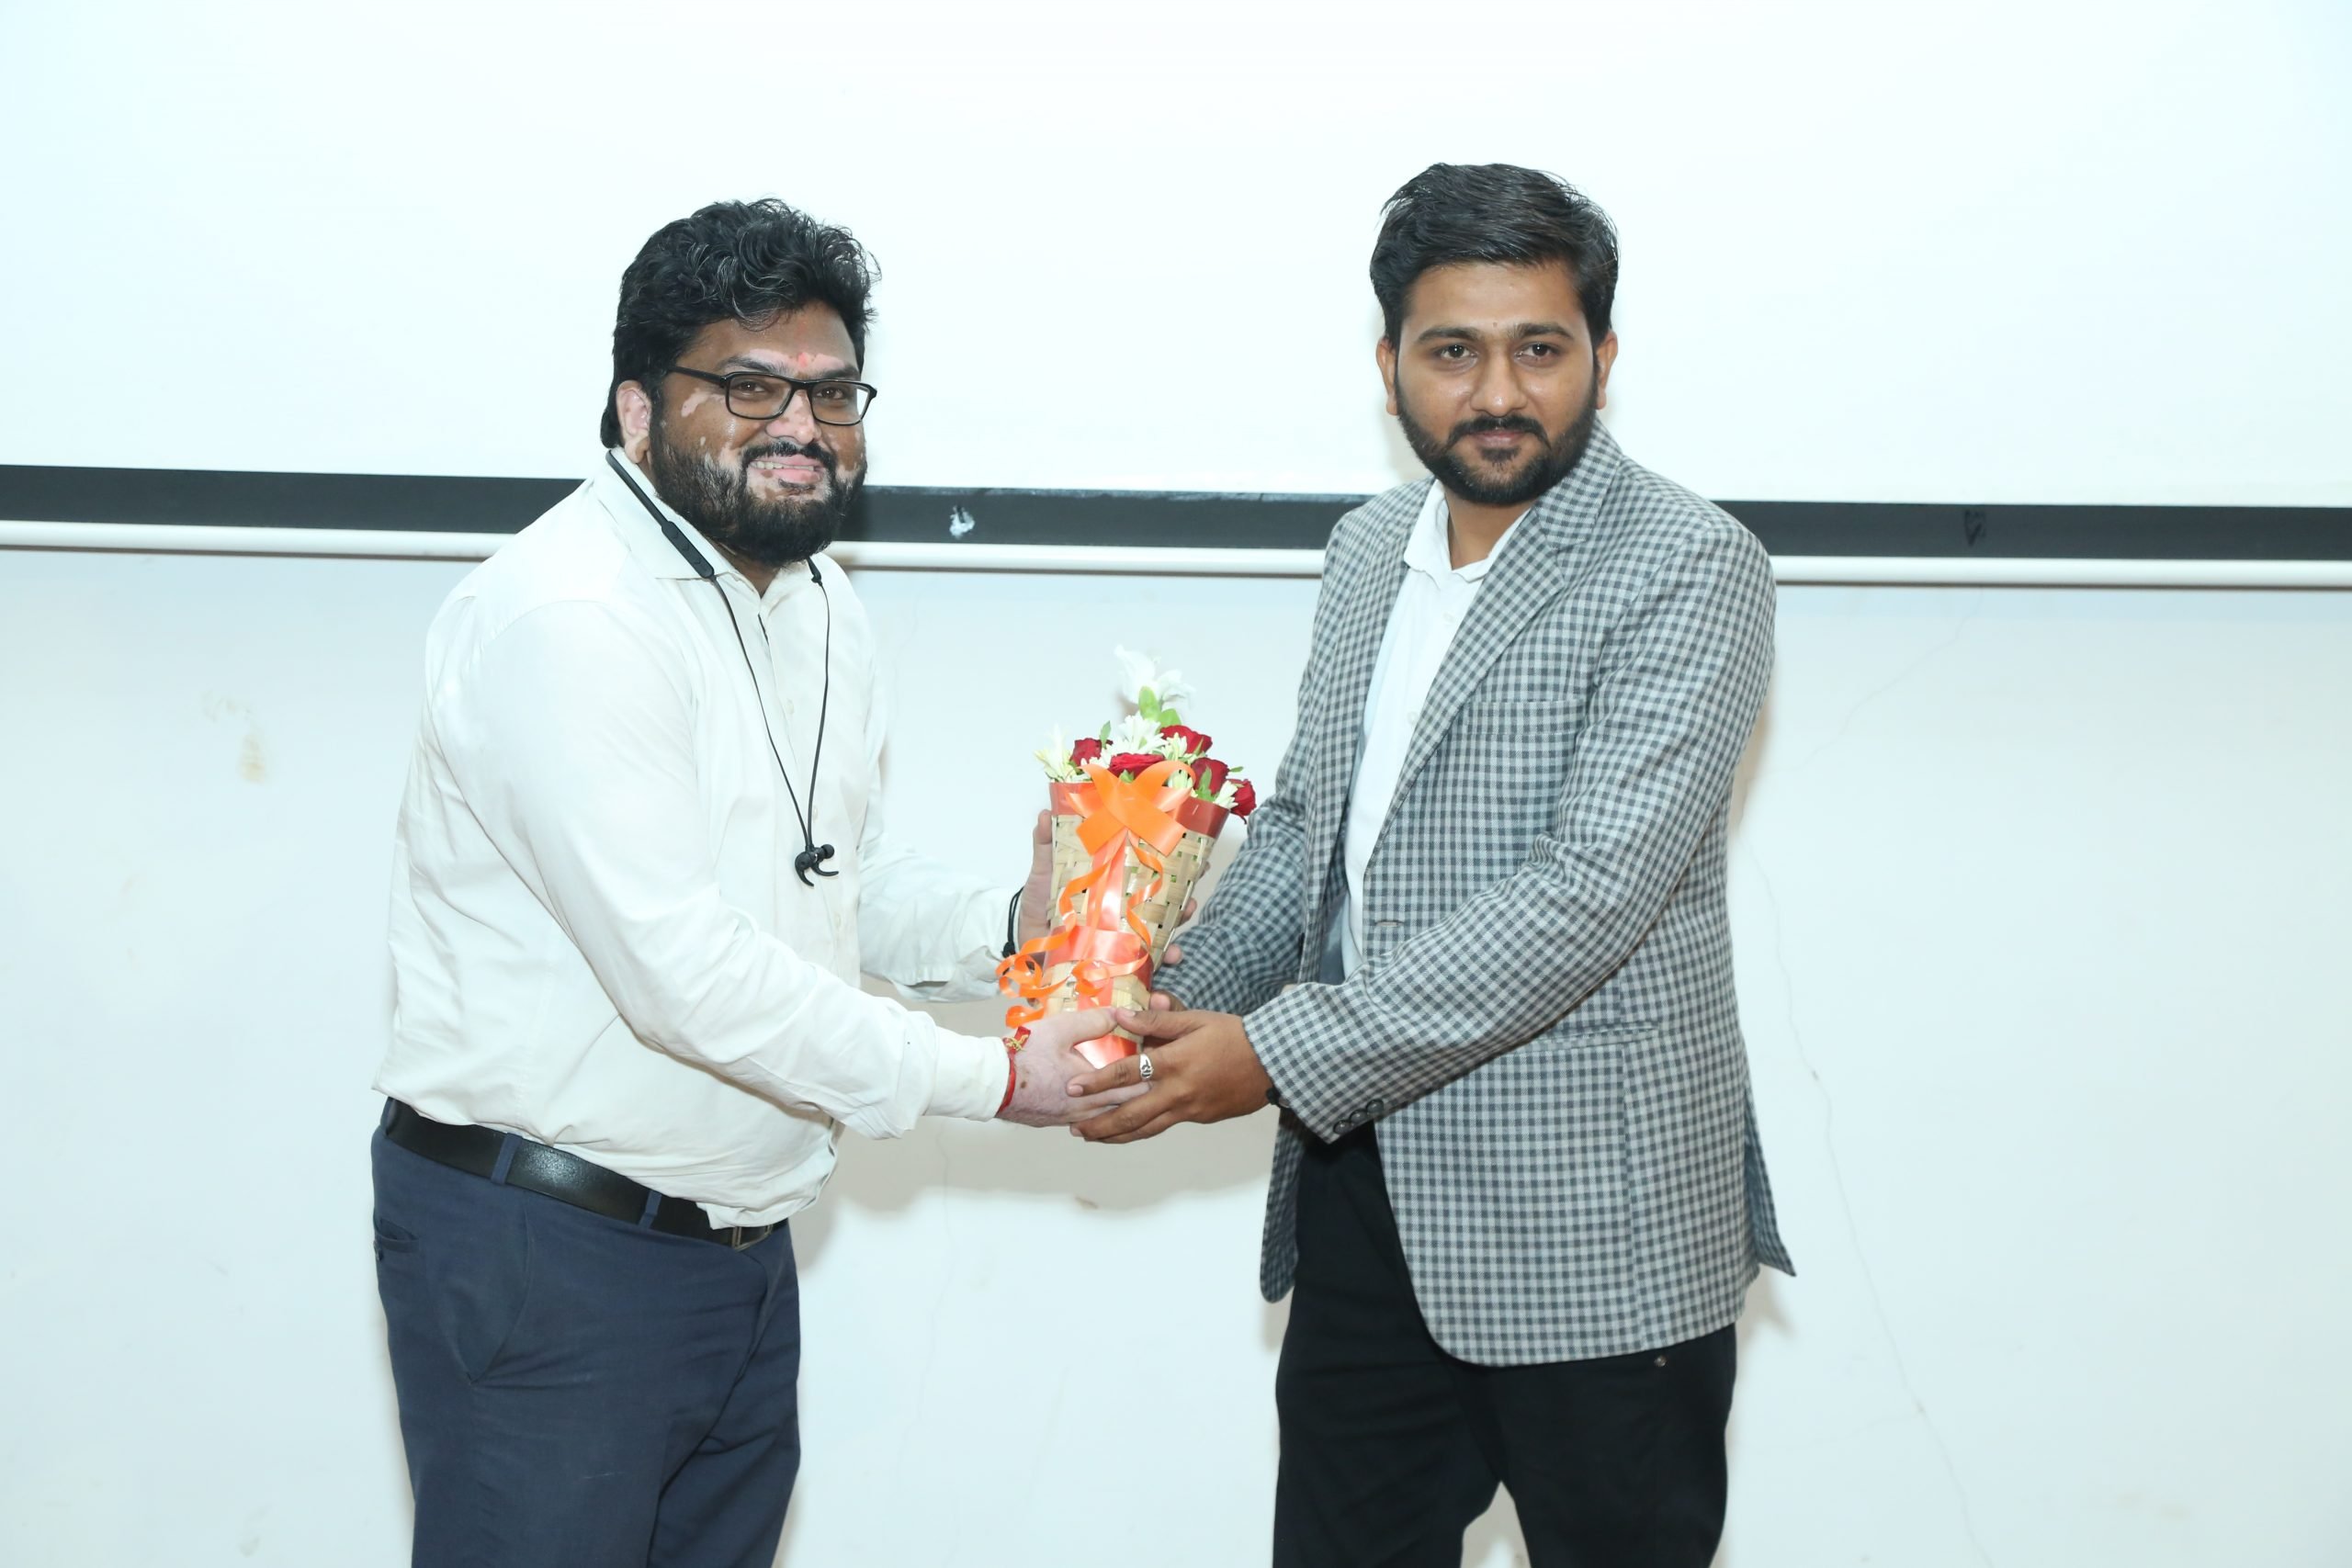 2019 Nasik IT association (NITA) - Startup - Business Development & Sales Course - Sandeep Sisodiya - Ahmedabad - Gujarat - India